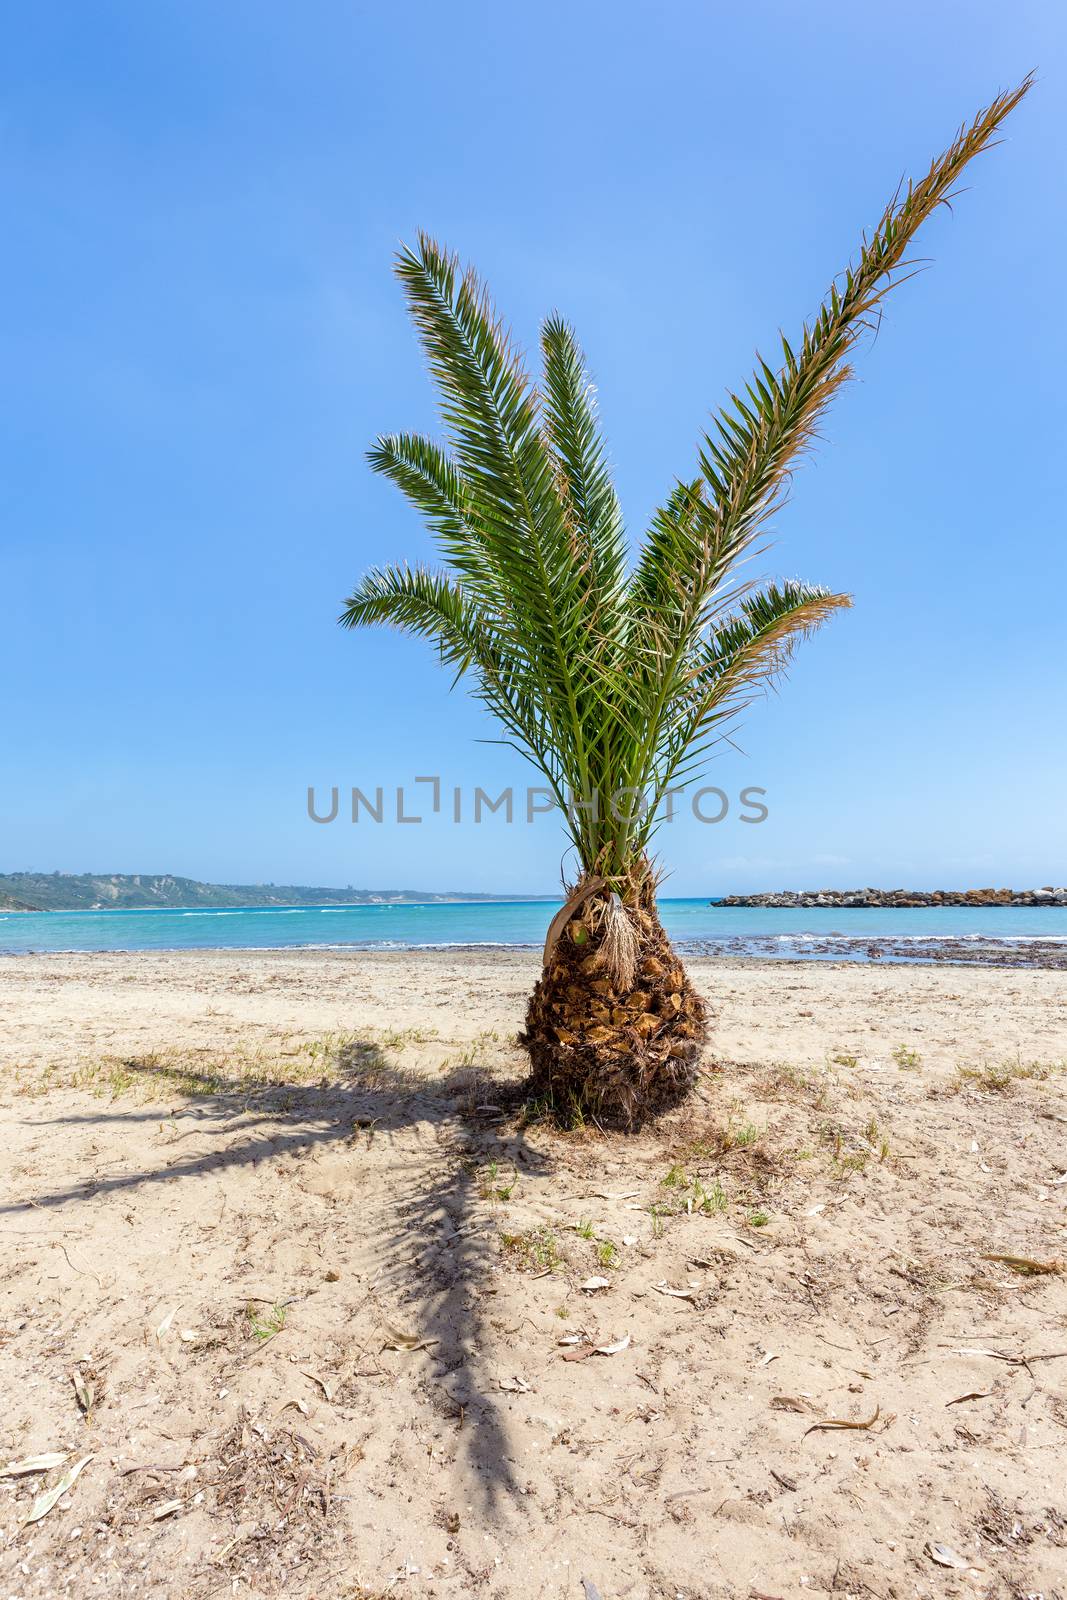 Exotic palm tree with shadow on sandy beach near blue sea